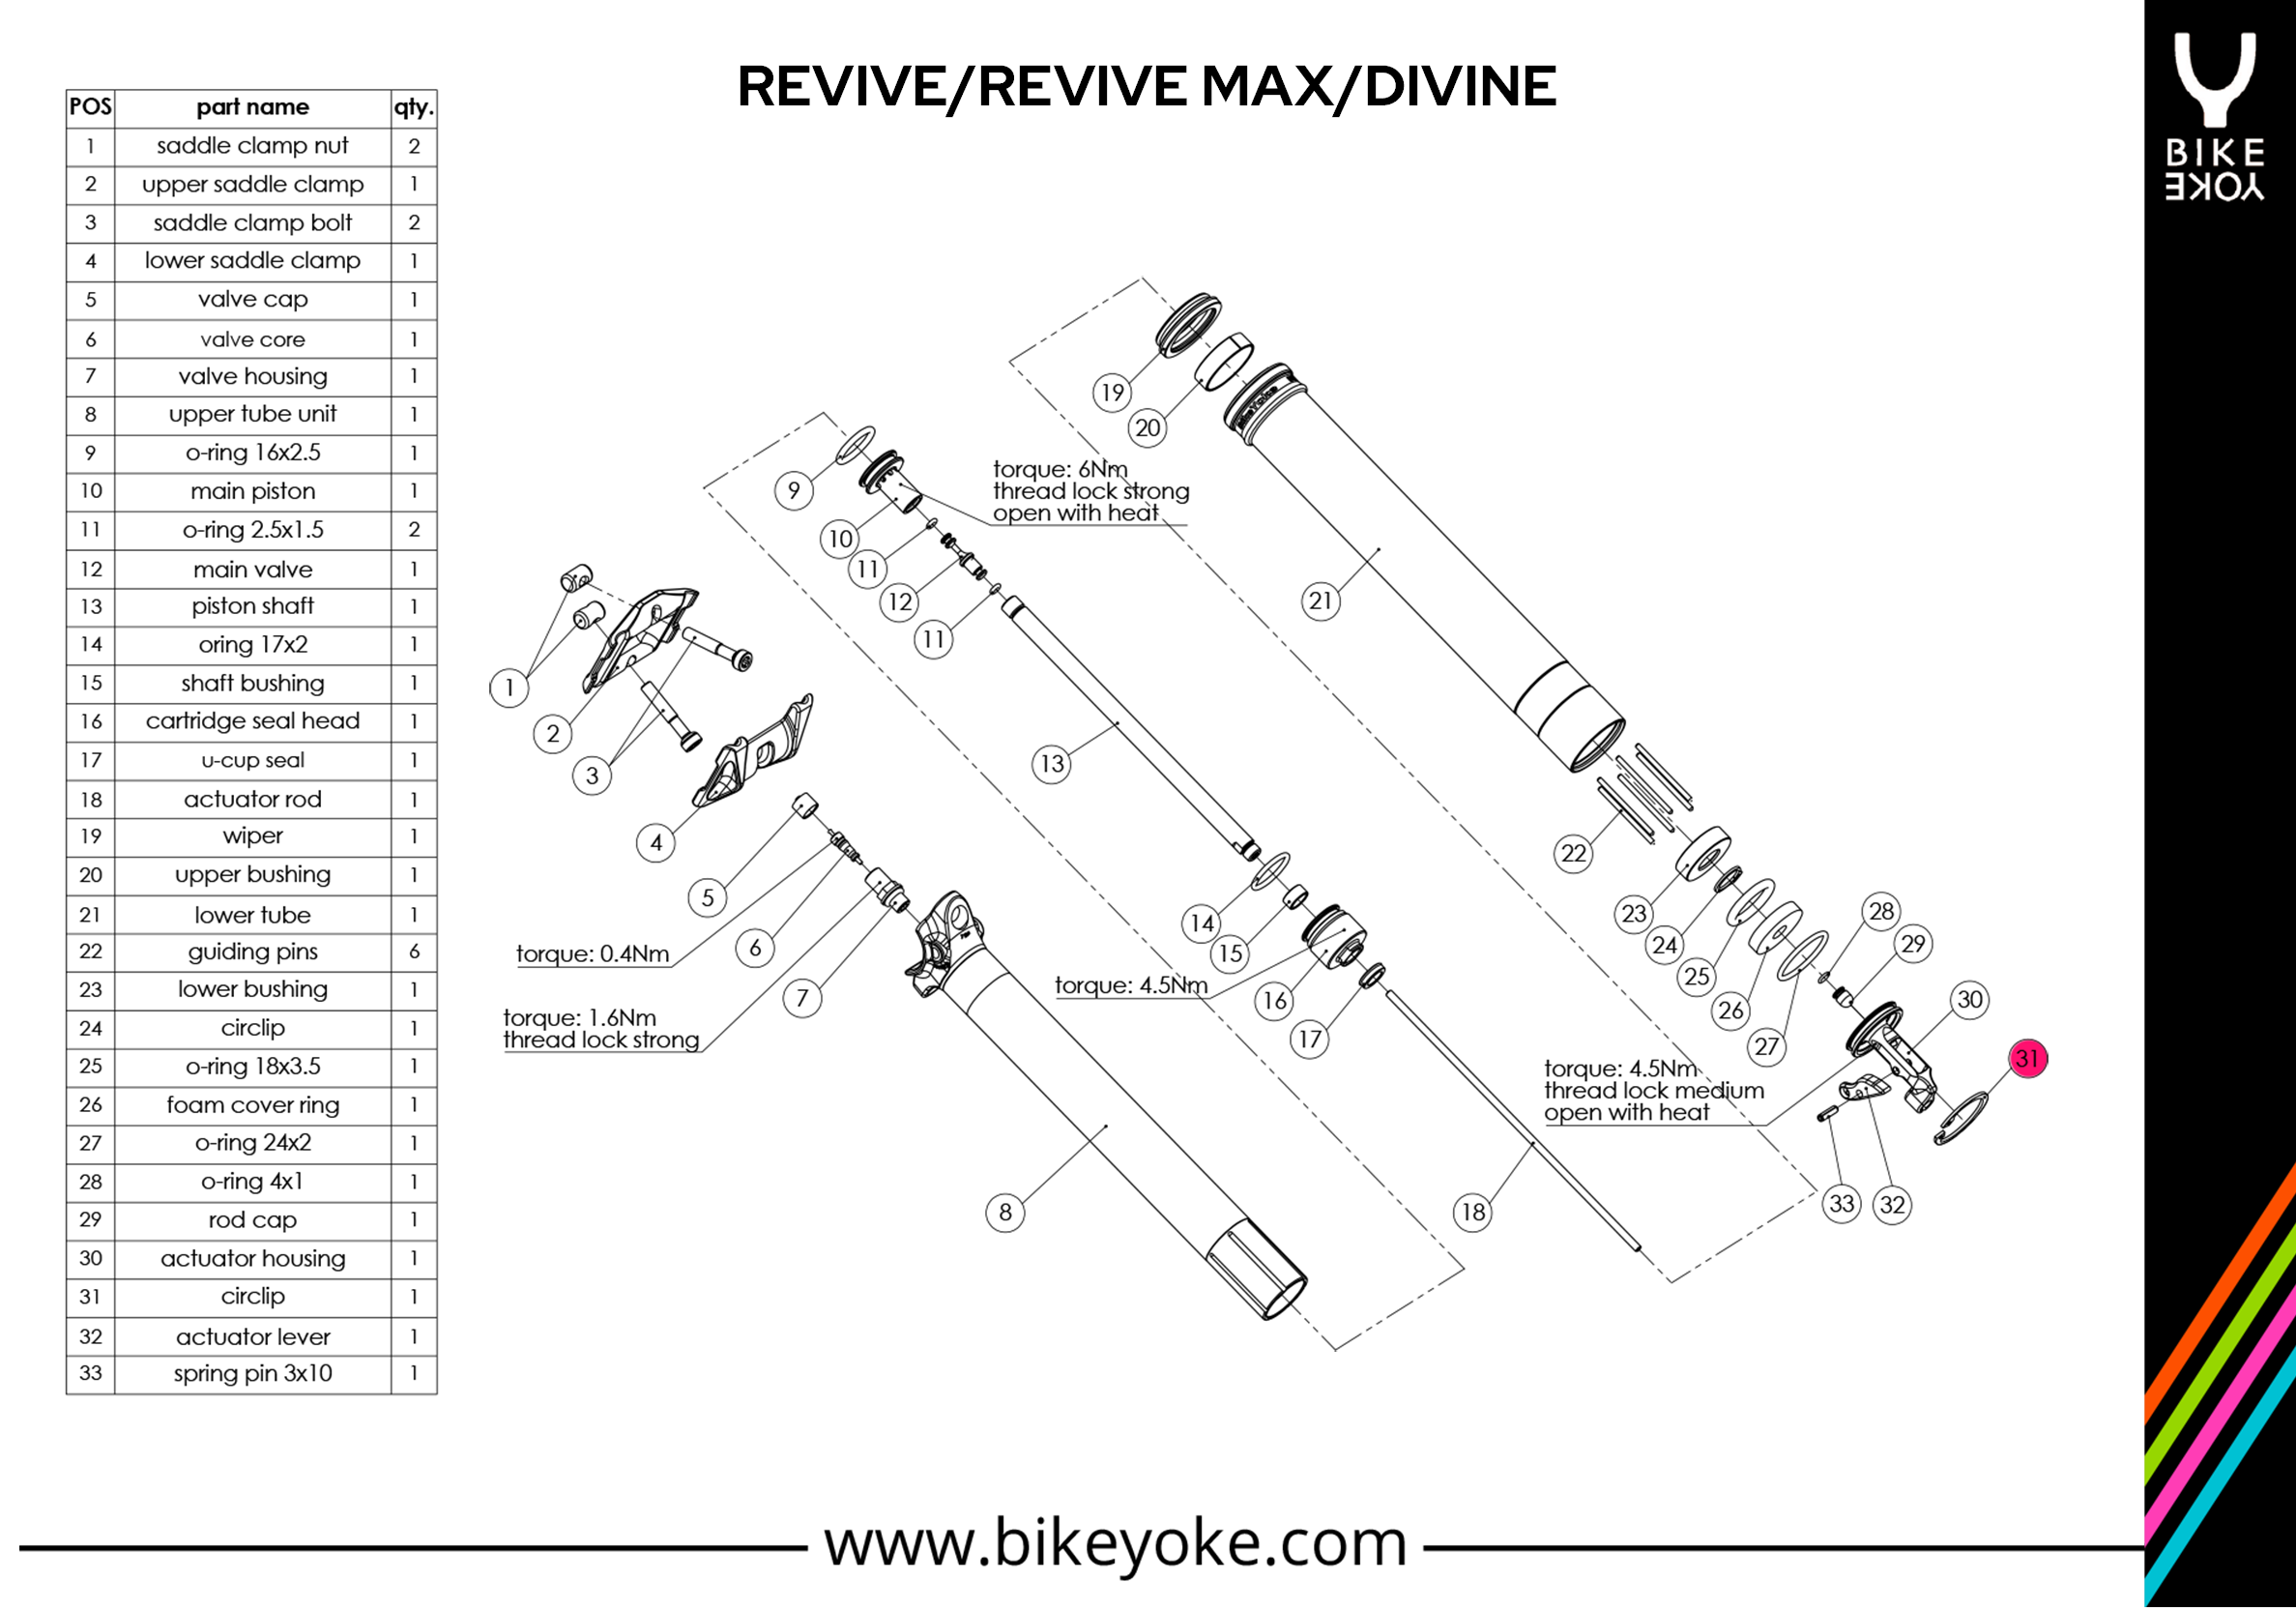 REVIVE MAX - circlip lower tube